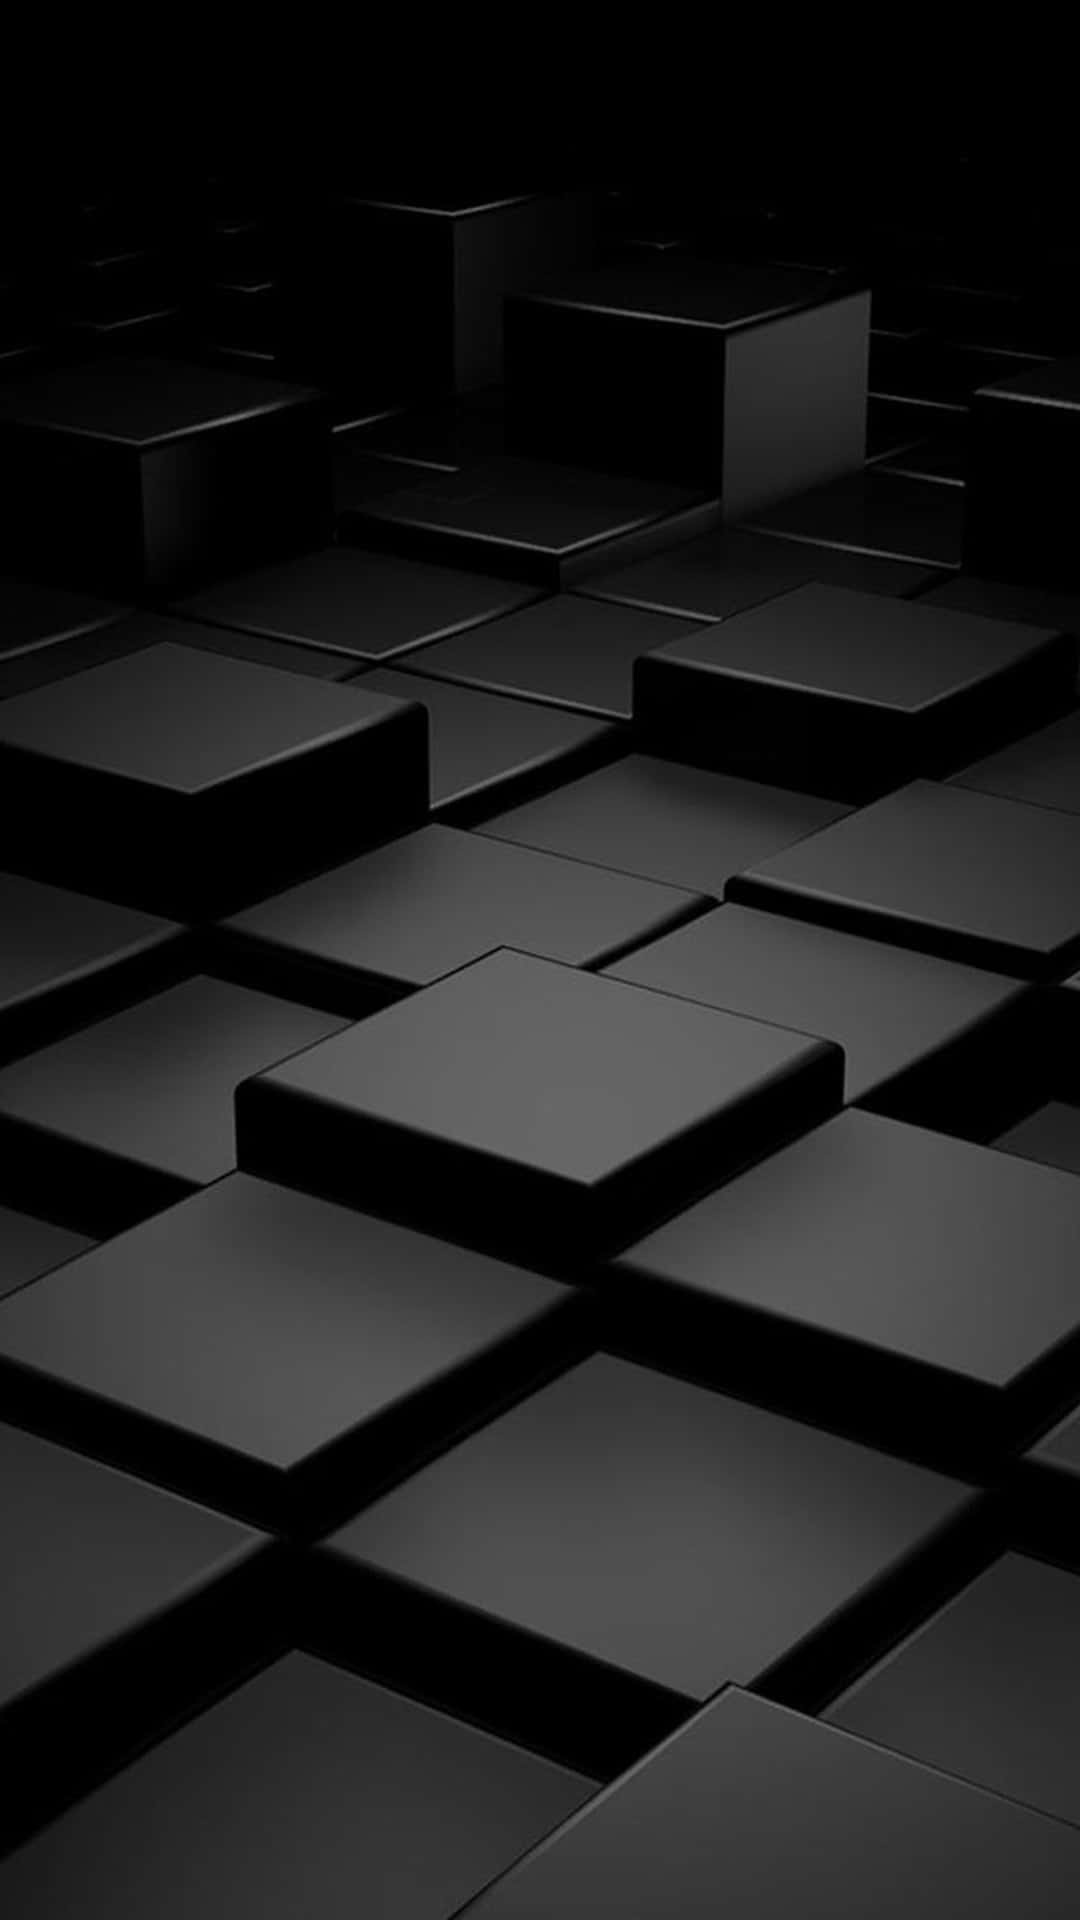 Black Squares For Iphone 6 Plus Wallpaper